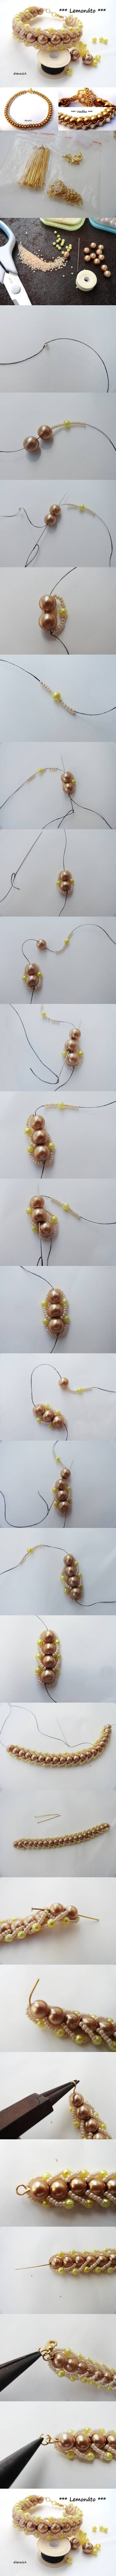 DIY Elegant Beads Bracelet | iCreativeIdeas.com Fo...